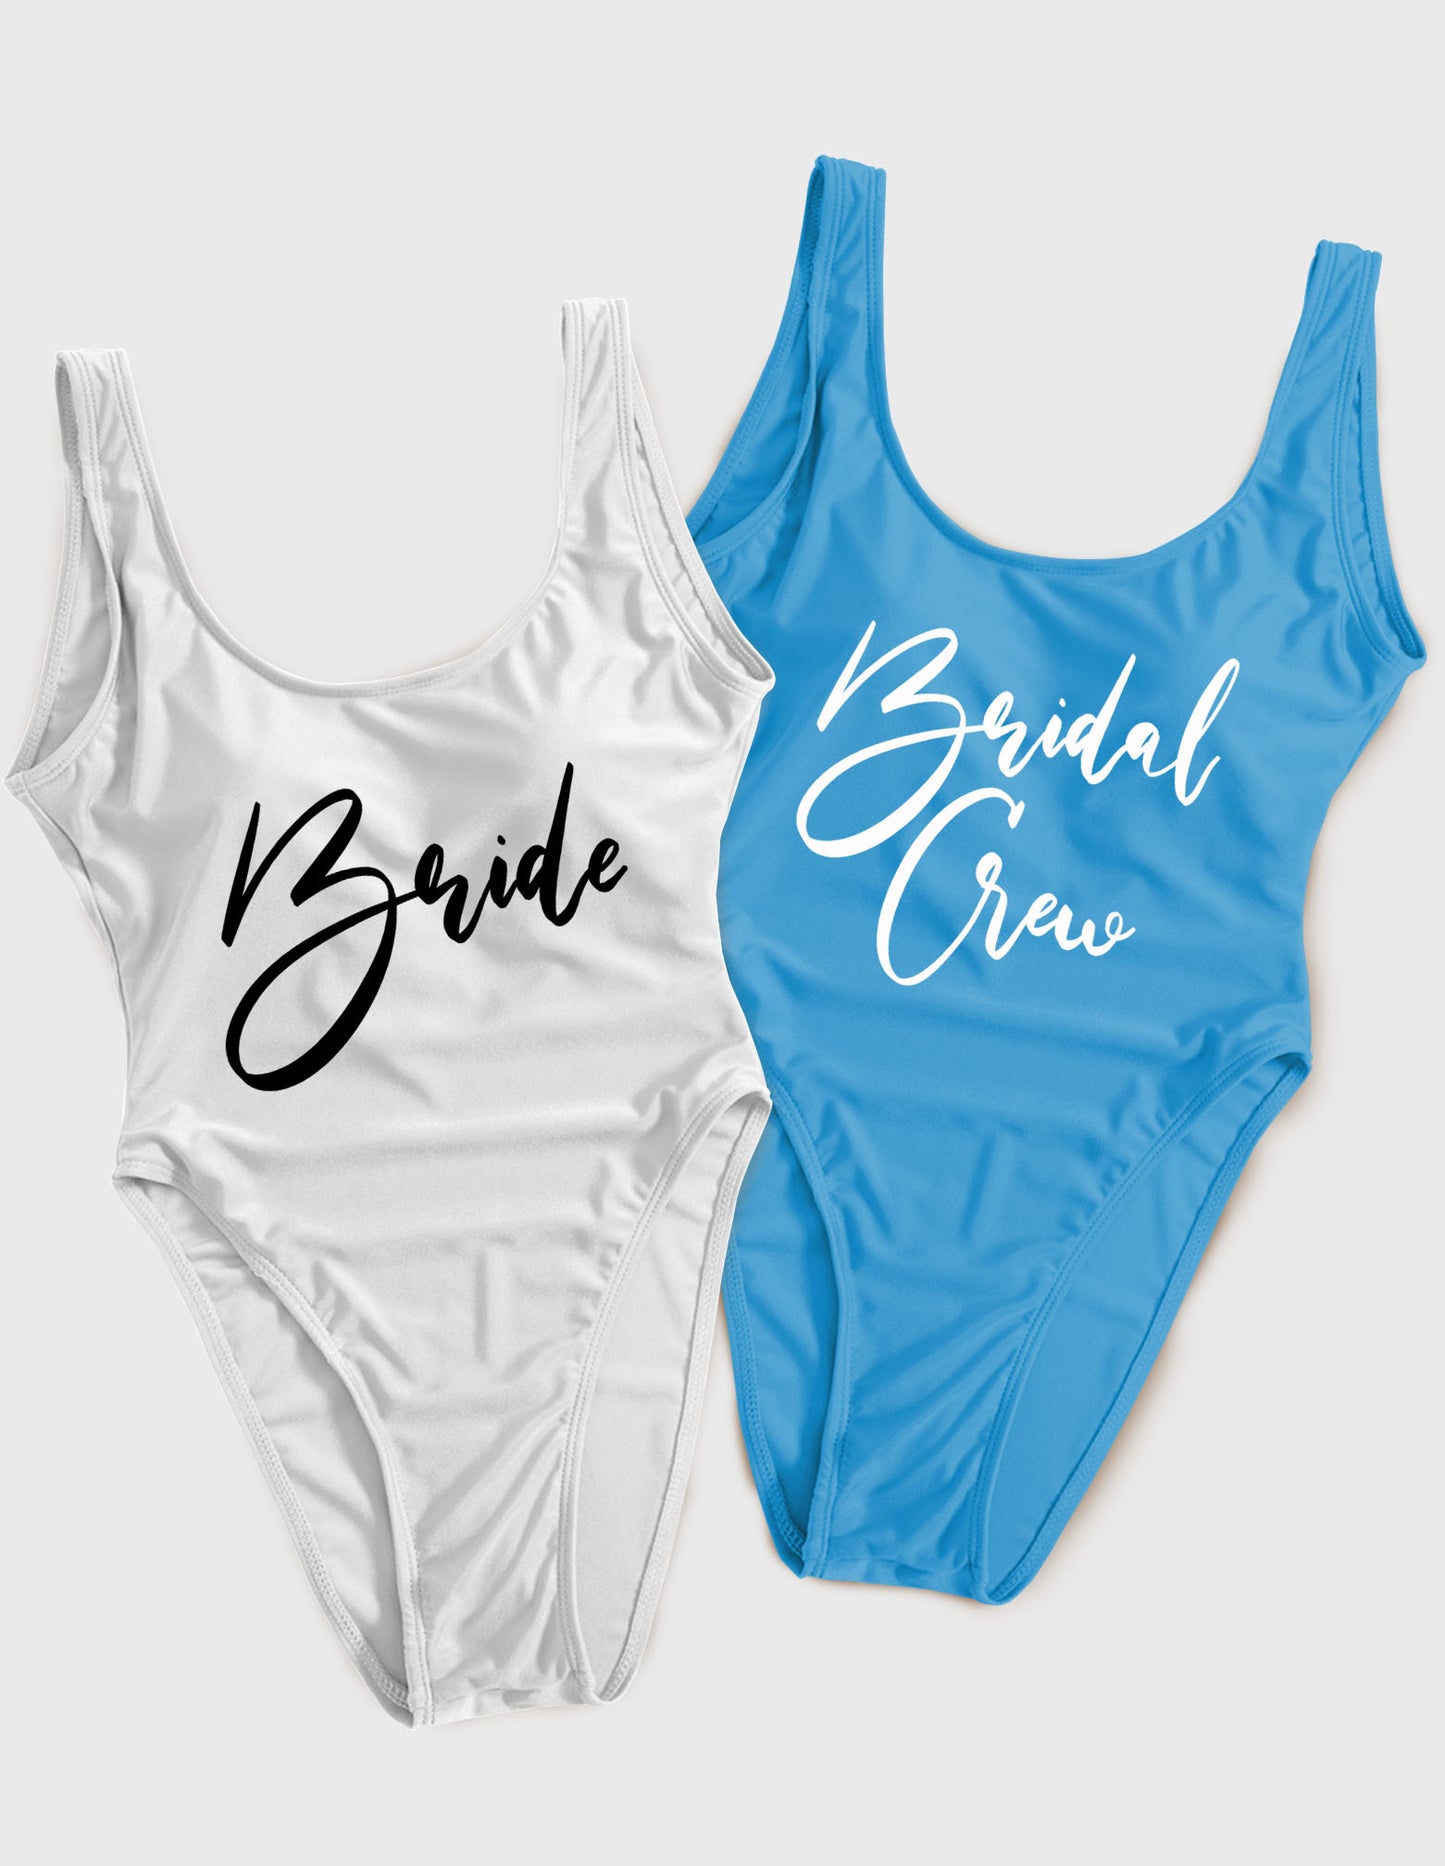 Bride & Bridal Crew - Swirly Swimsuit